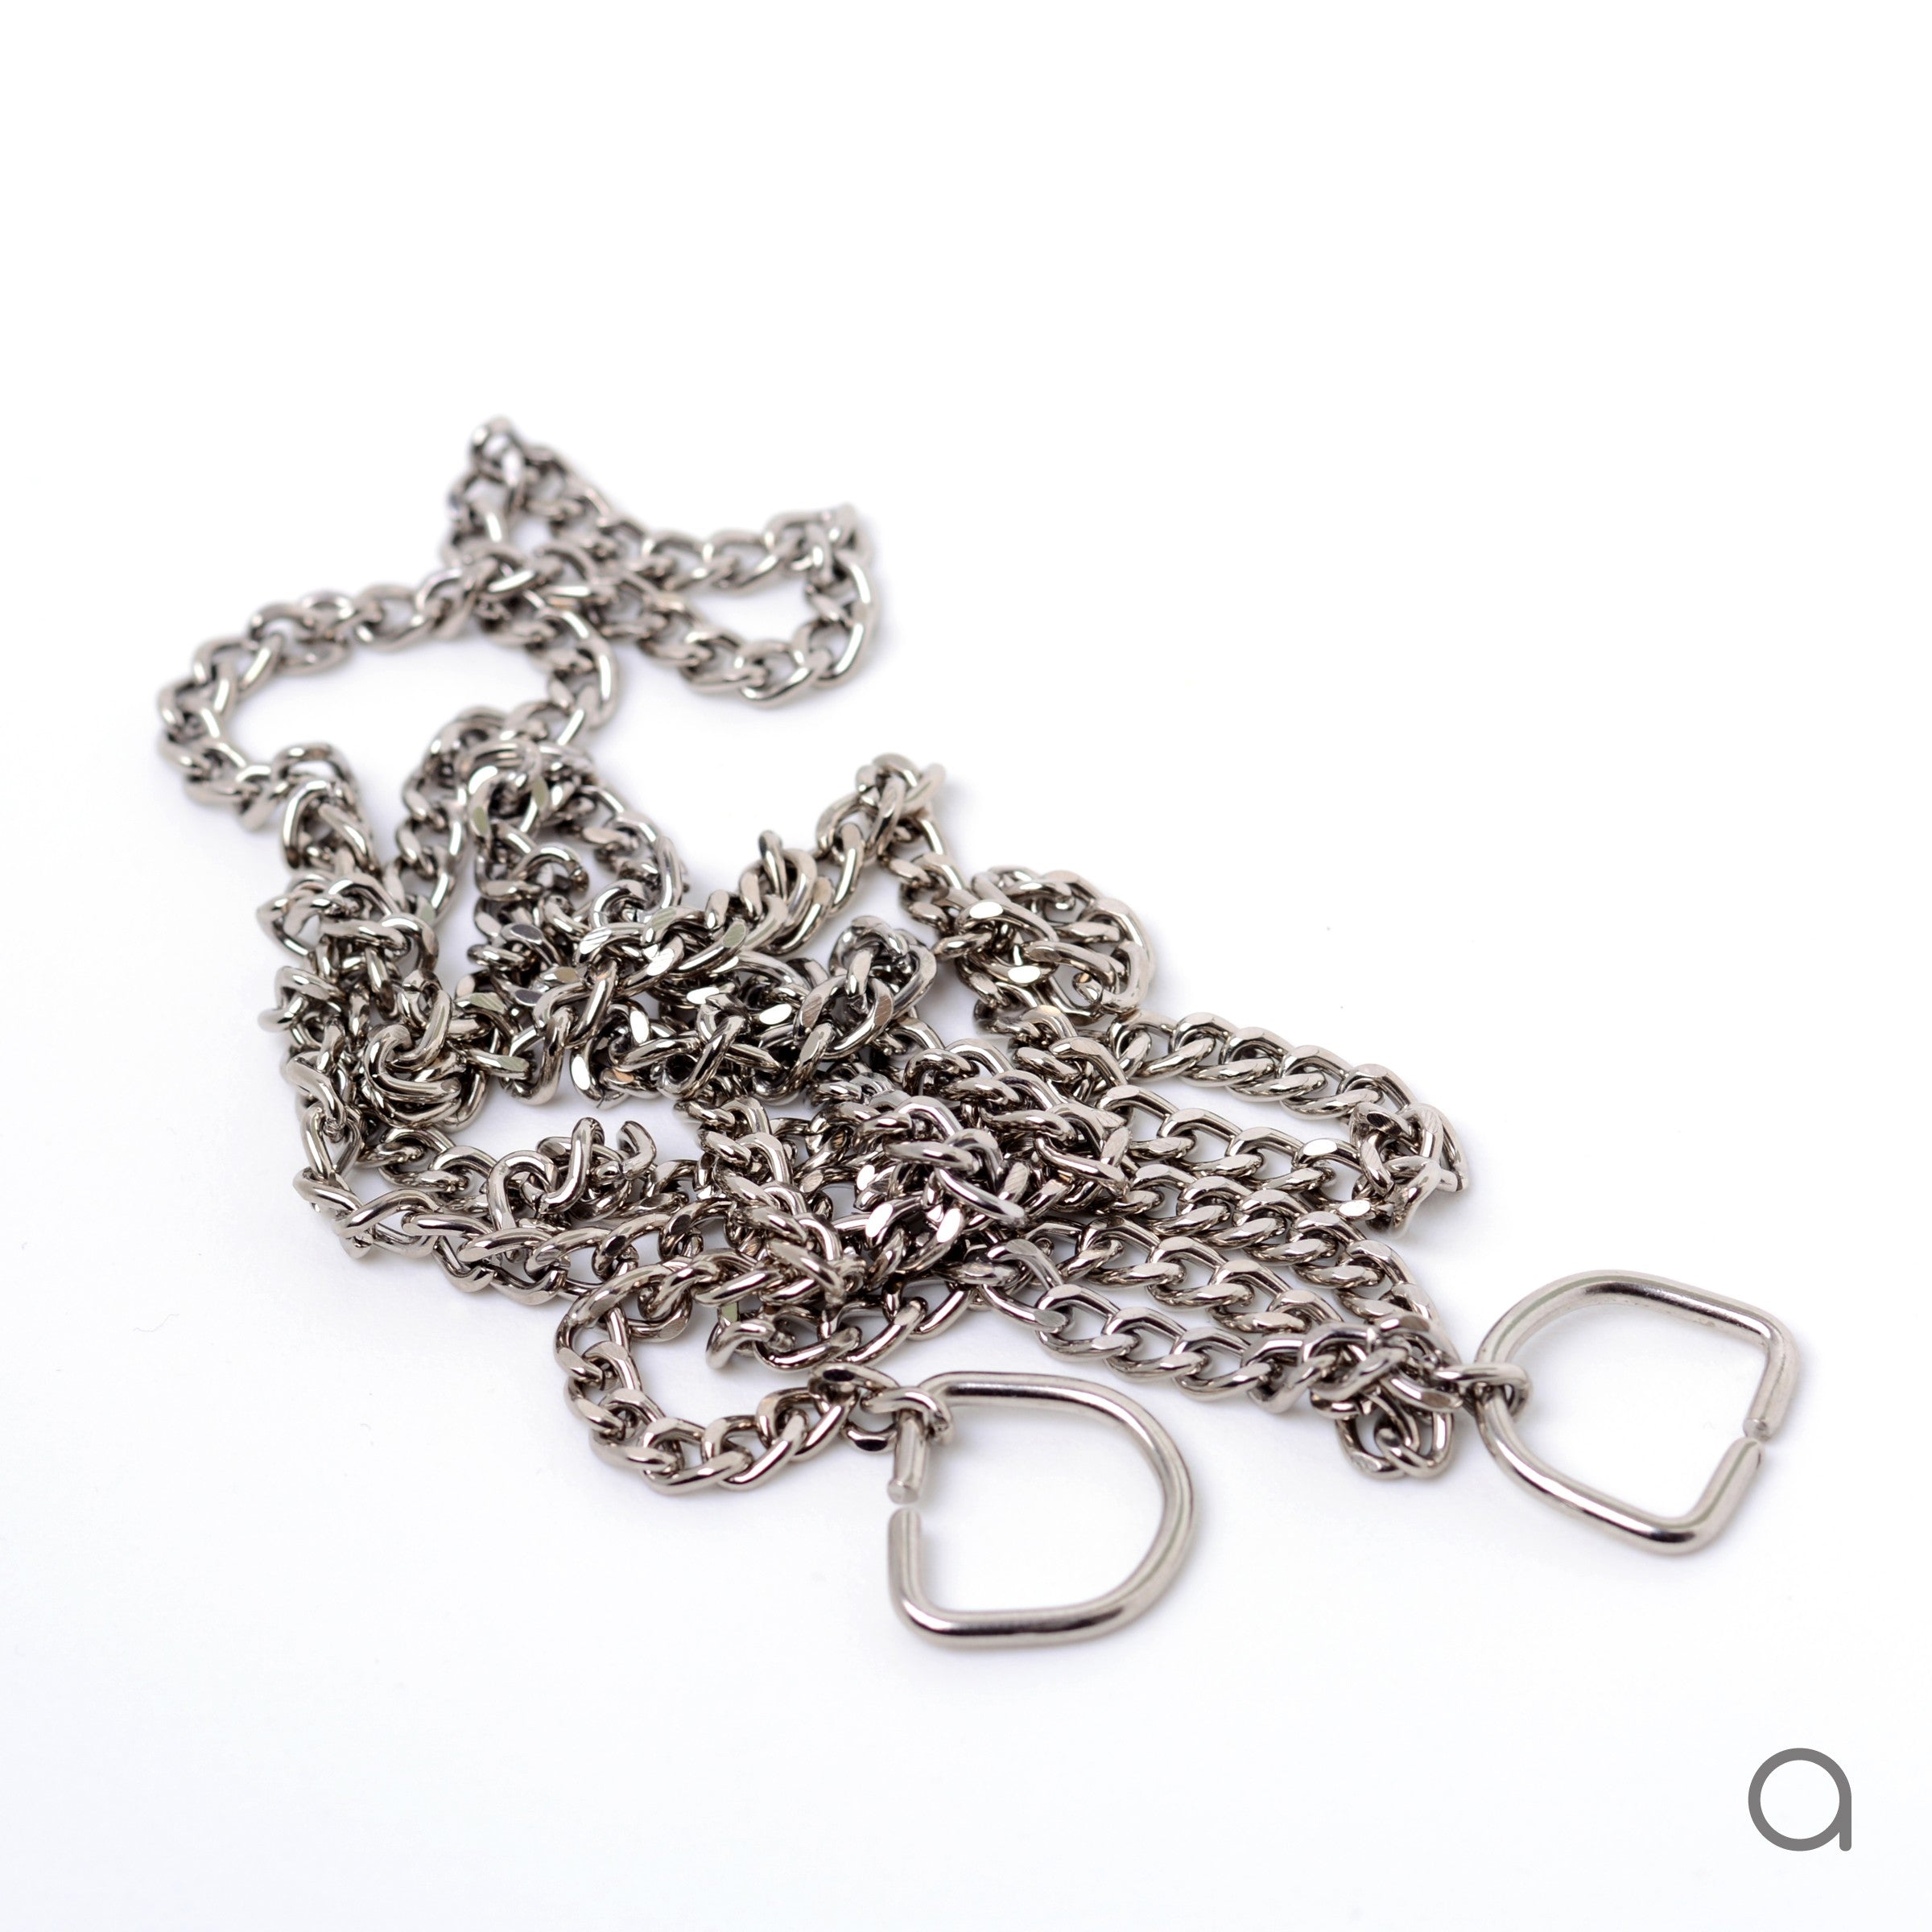 Removable silver color chain - 90 cm